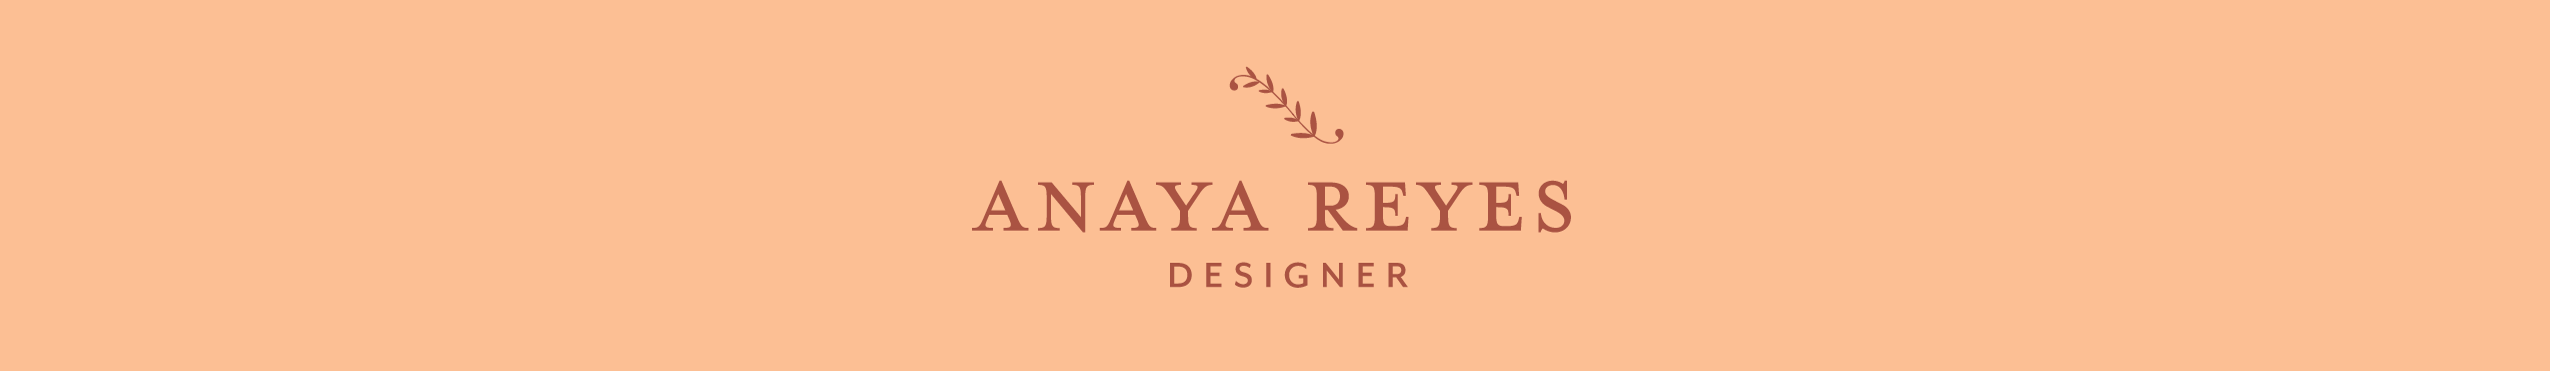 Anaya Reyes のプロファイルバナー